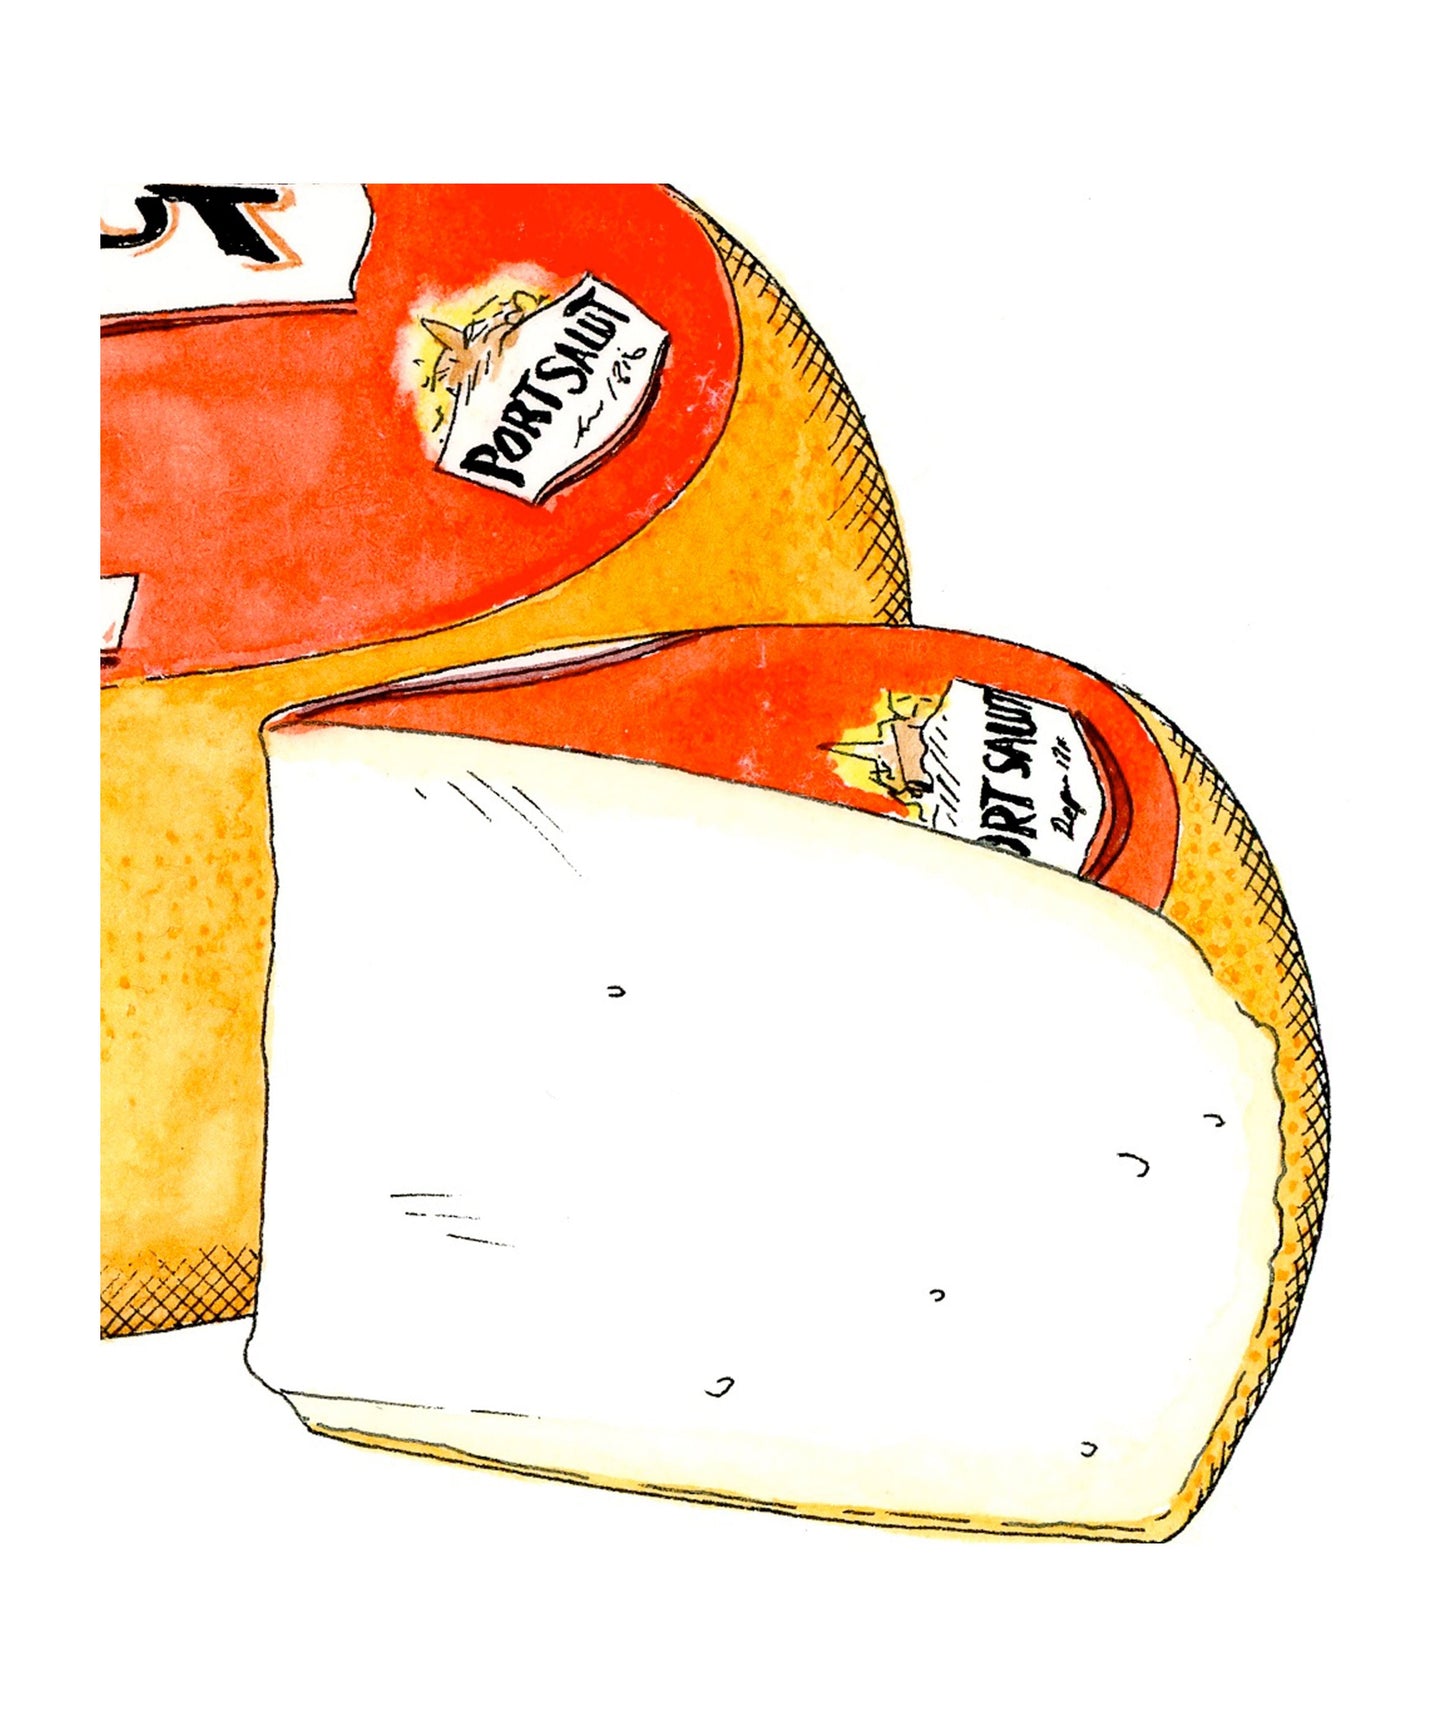 Port Salut Cheese Illustration